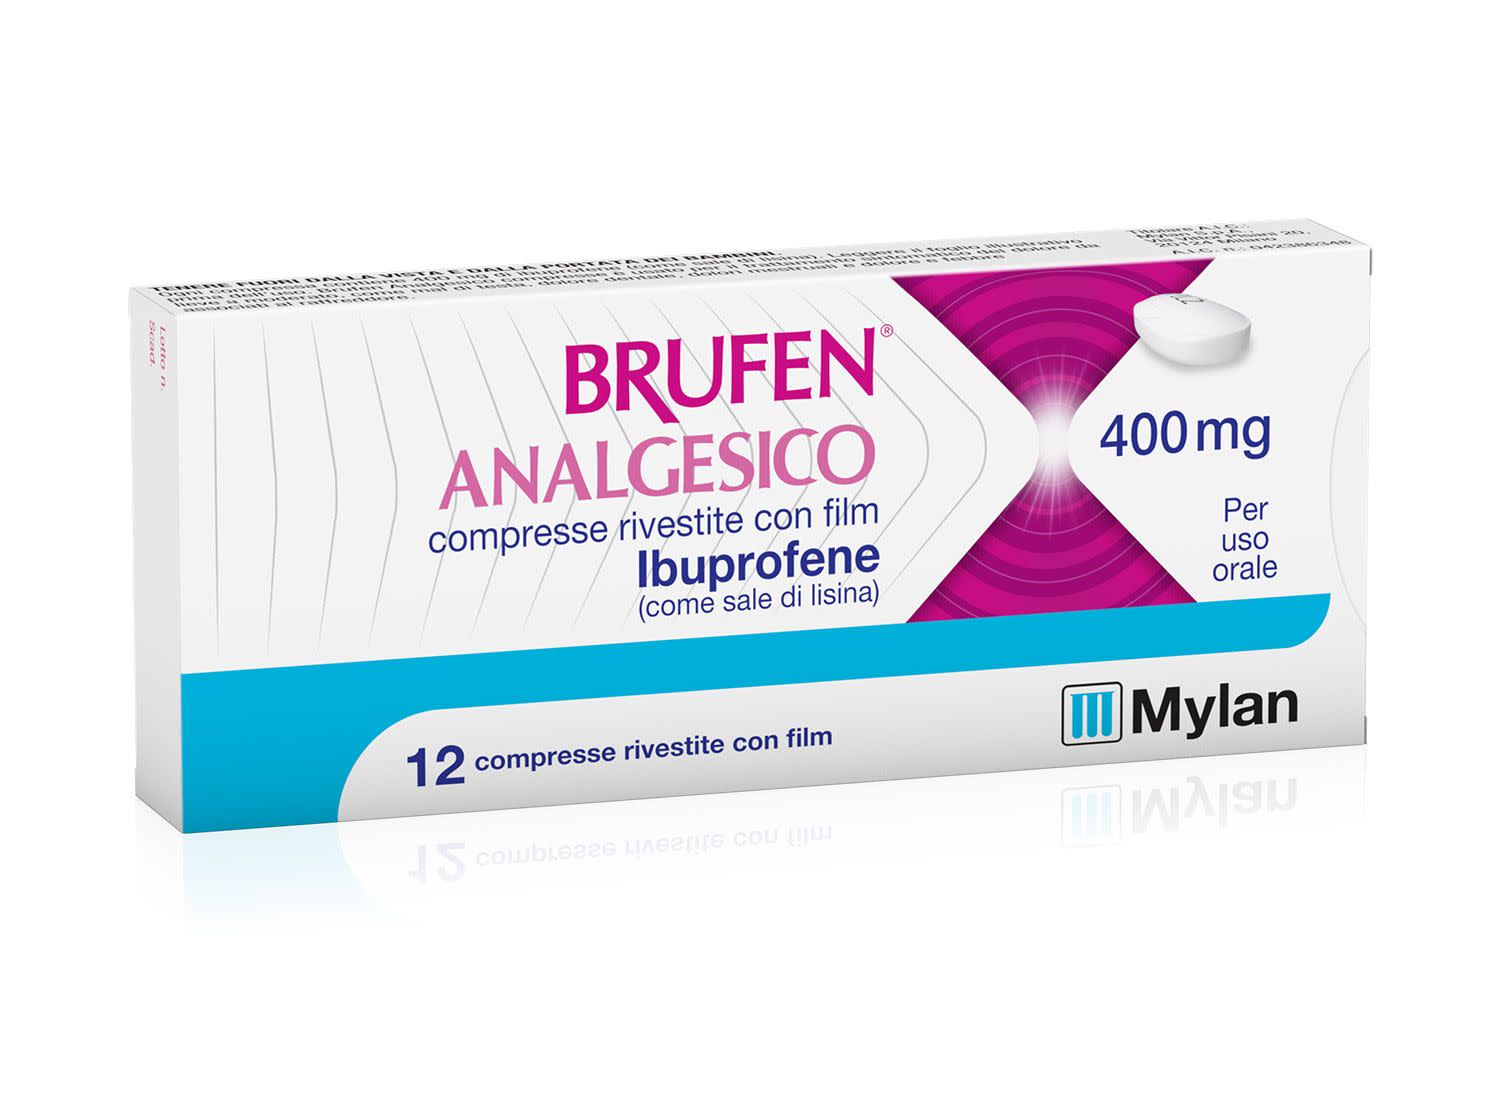 042386348 - Brufen Analgesico 400mg Ibuprofene 12 Compresse - 7883793_2.jpg